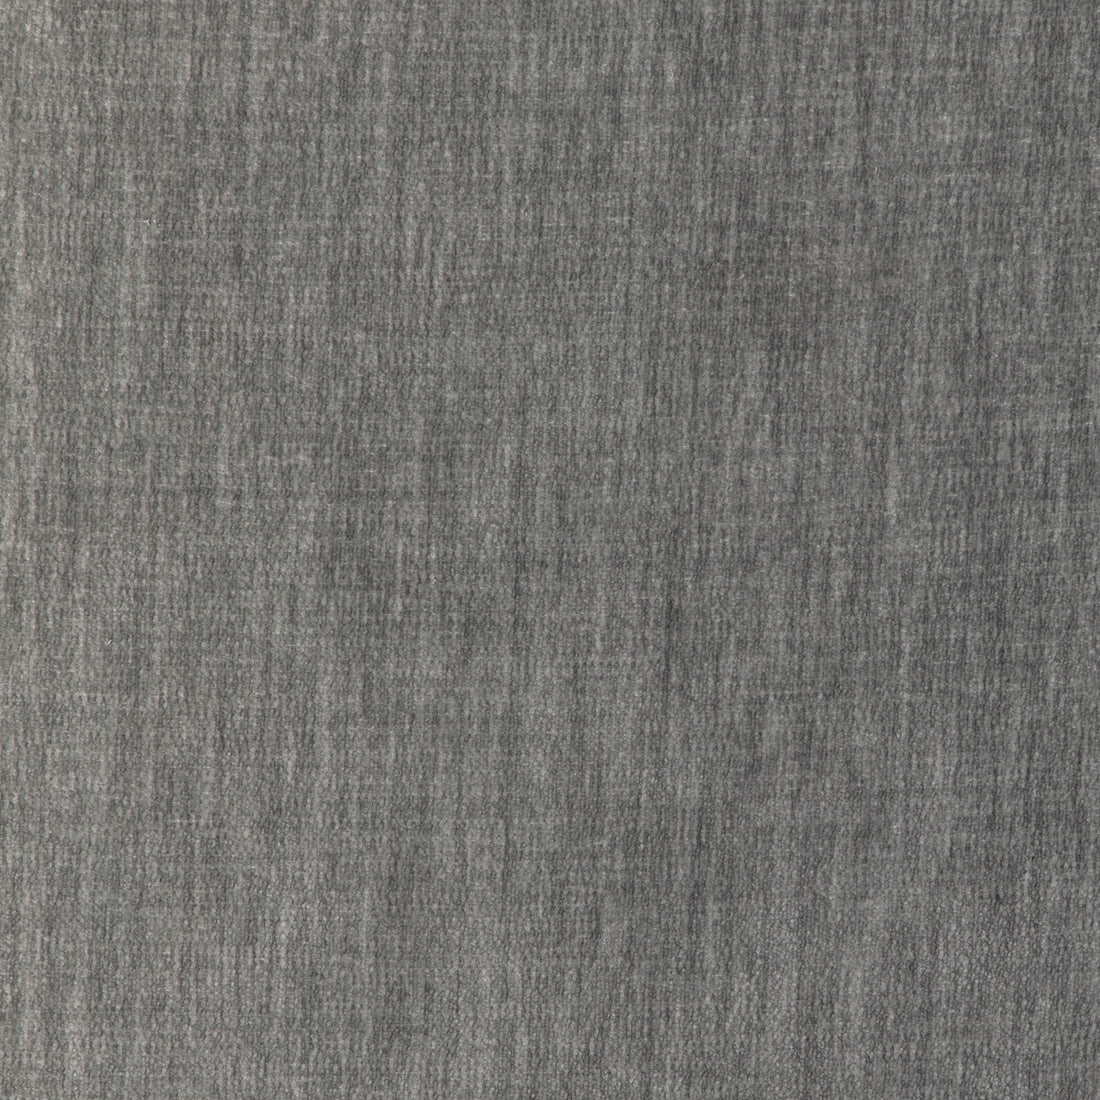 Kravet Smart fabric in 36676-52 color - pattern 36676.52.0 - by Kravet Smart in the Performance Kravetarmor collection